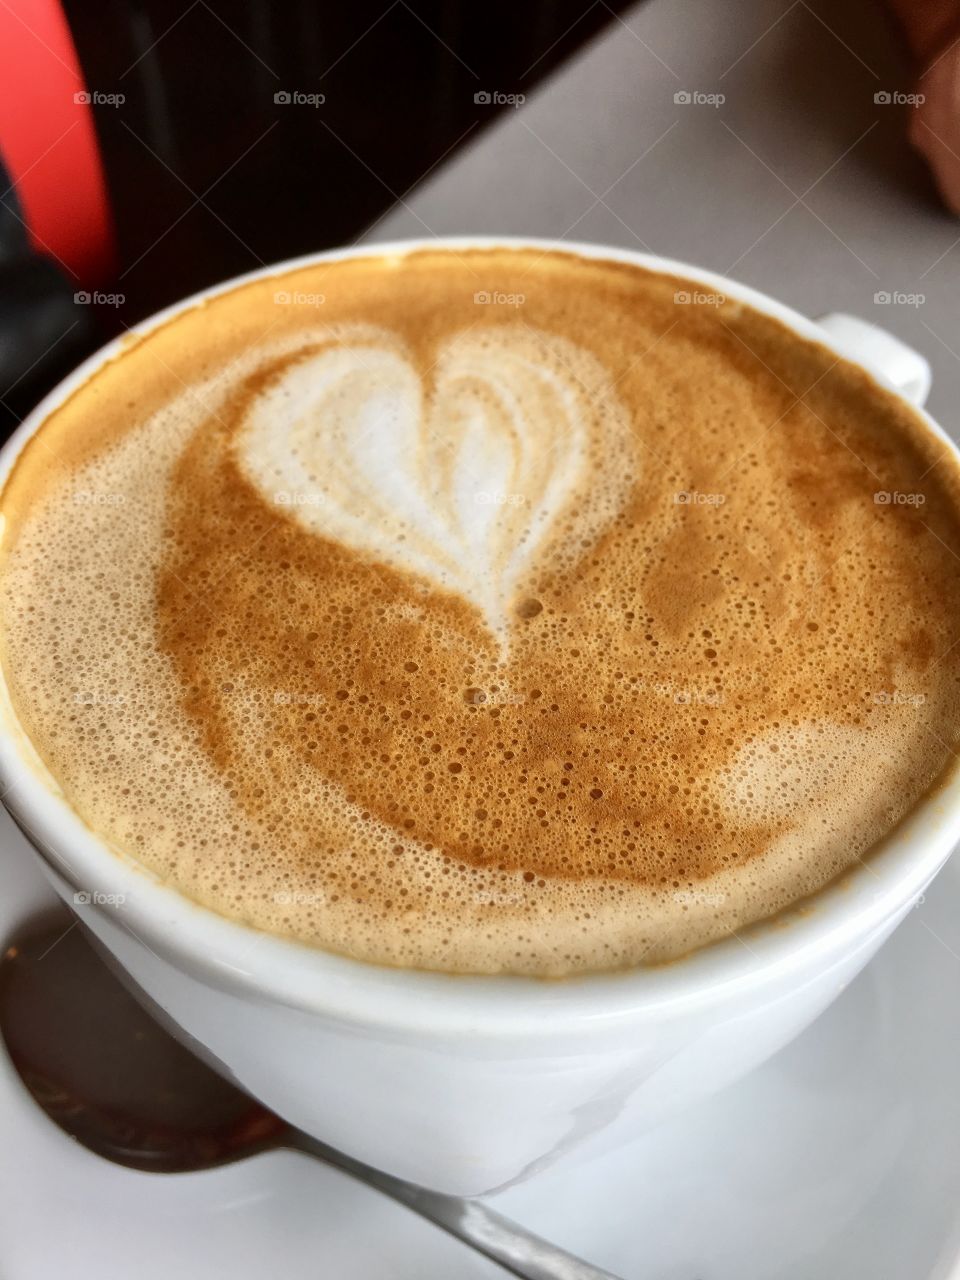 Will you love me forever? Heart shape in foam in coffee Cafe latte 